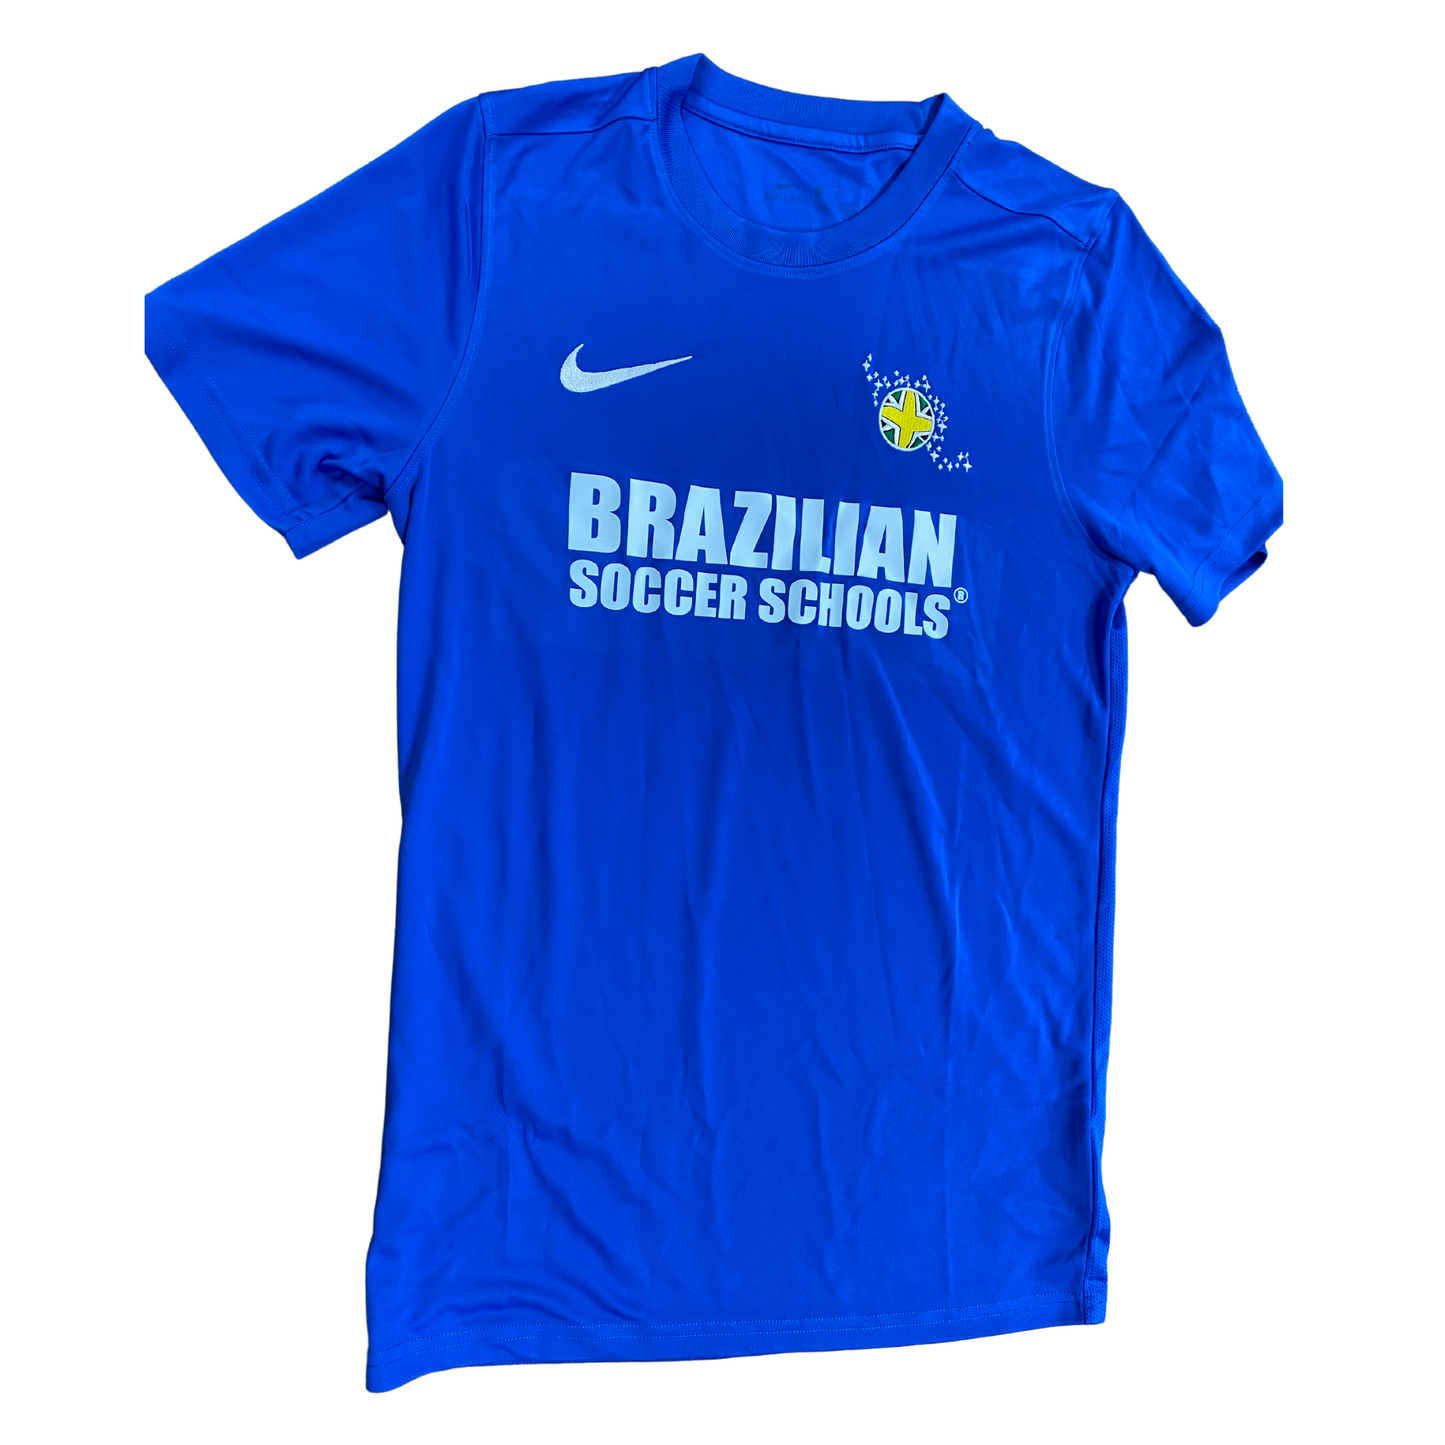 Brazilian Soccer Schools® Coach Top (Men's)